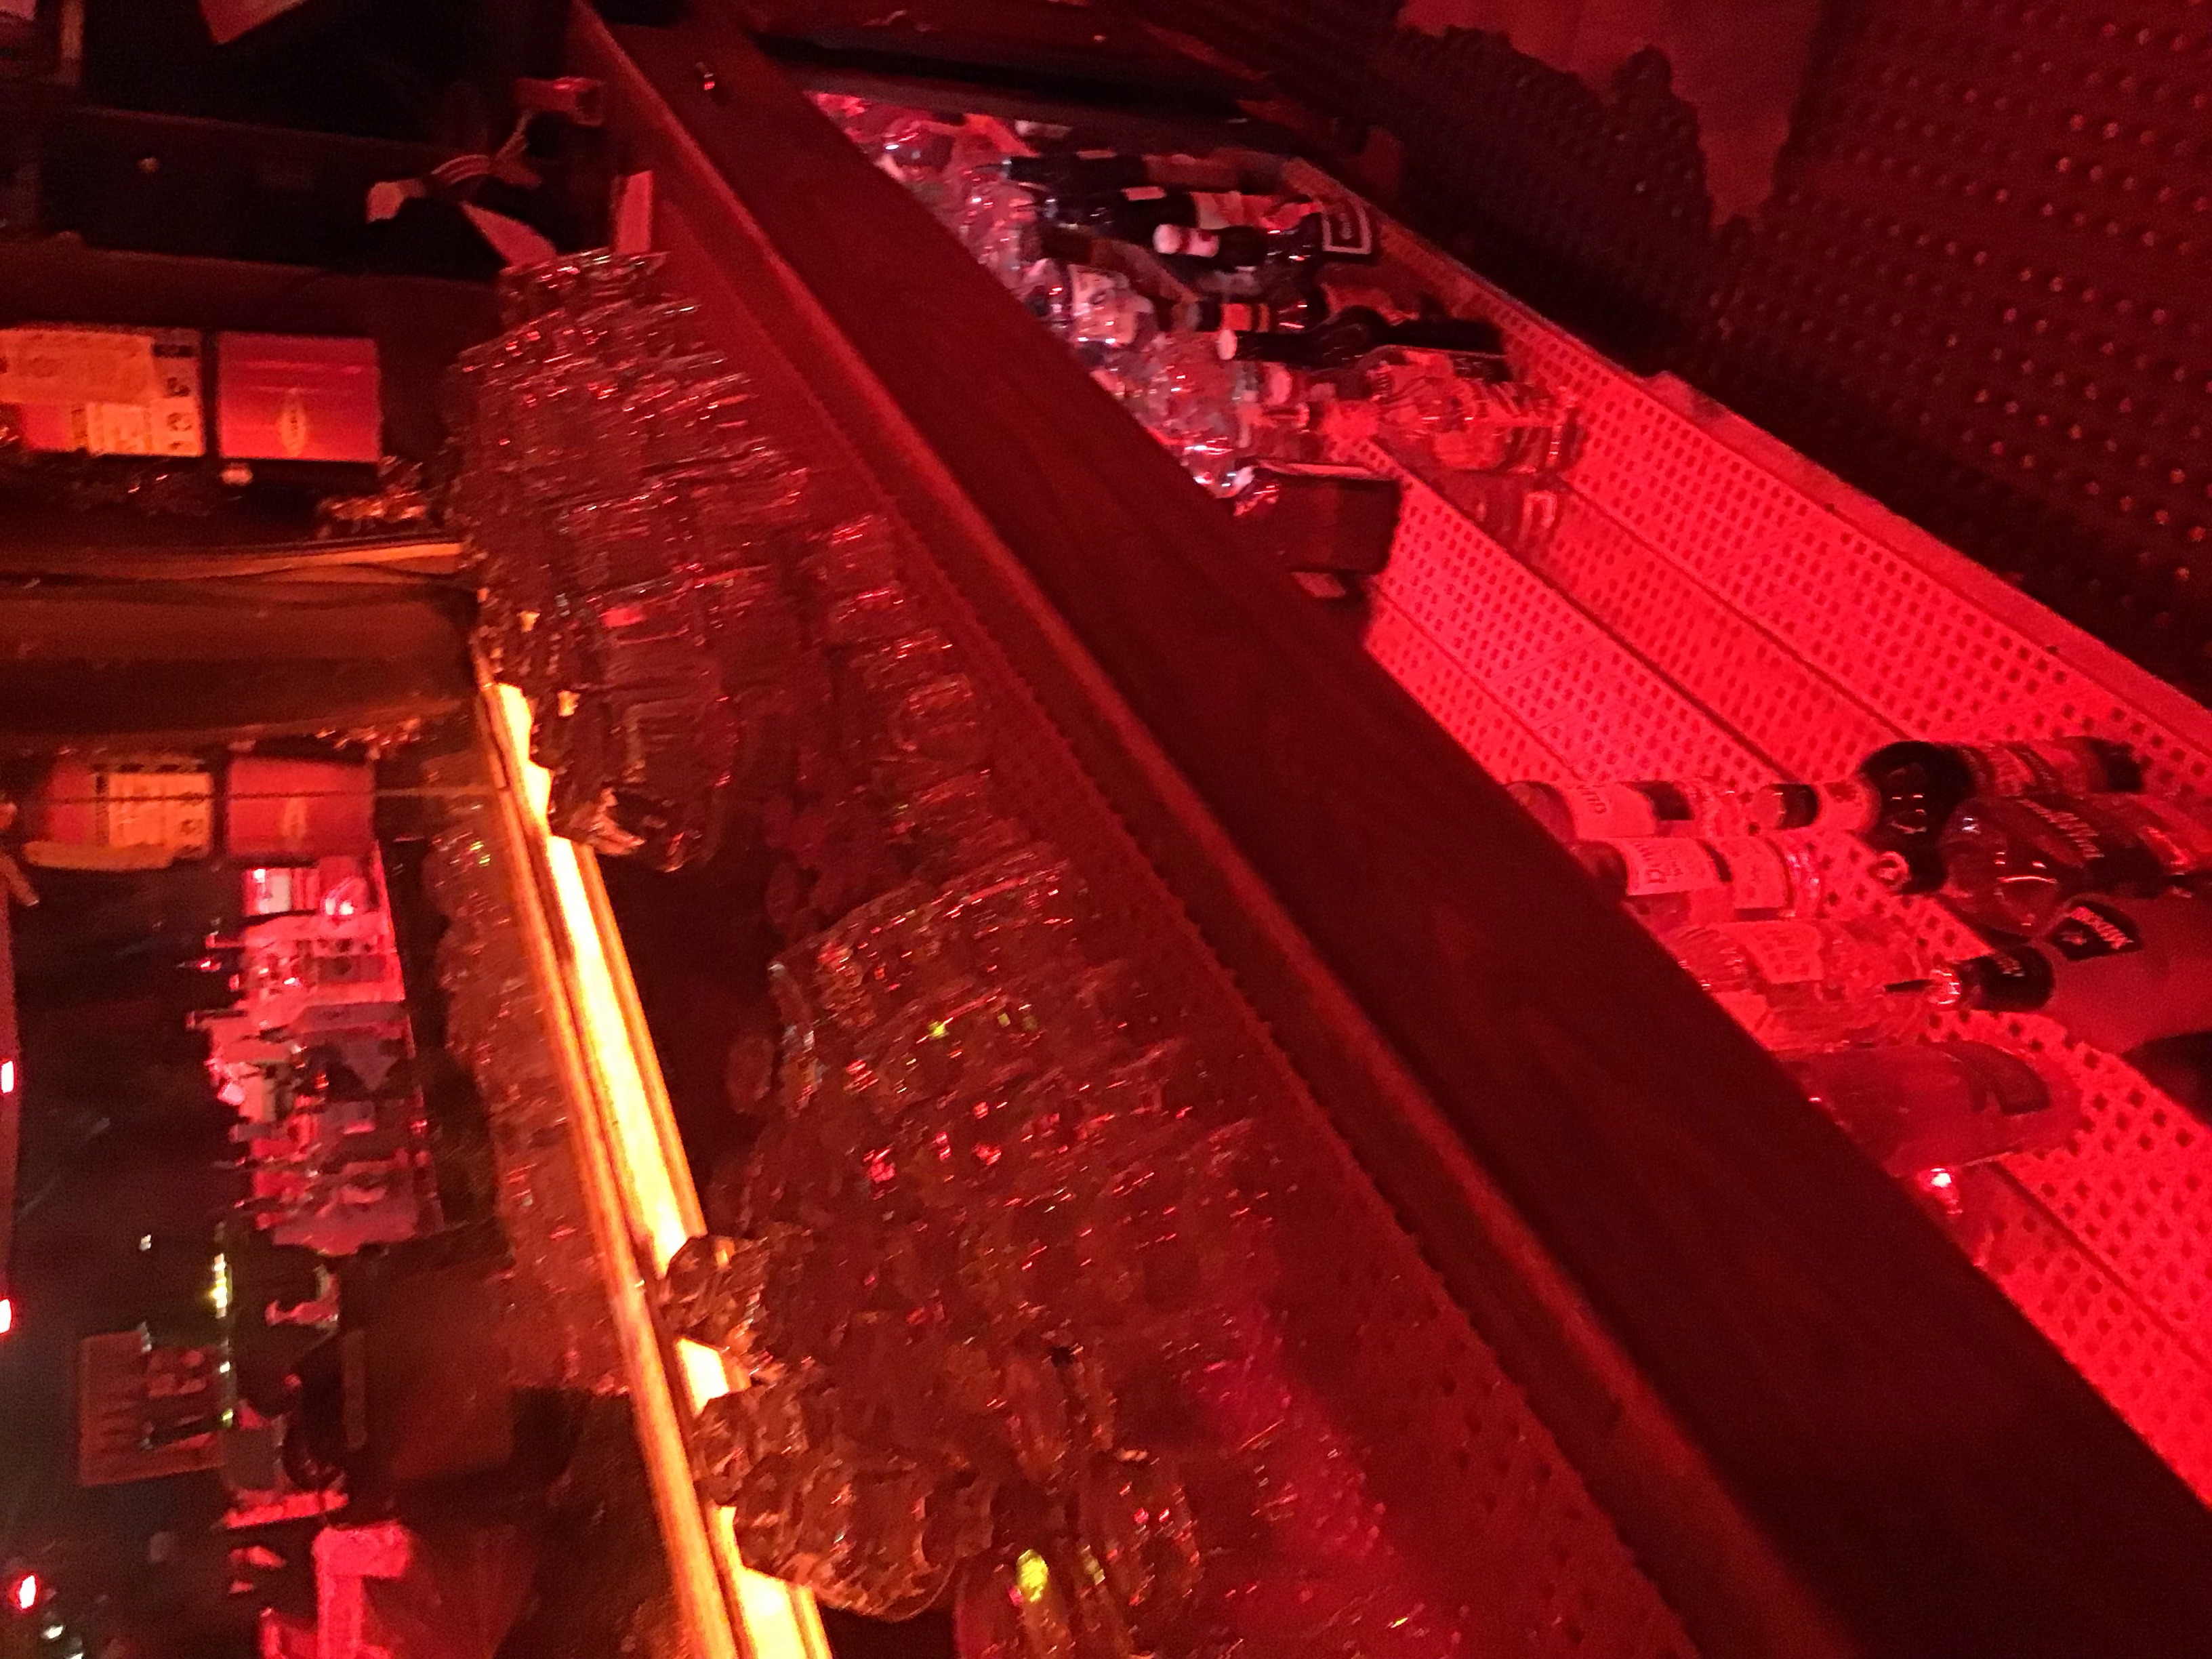 Install LED lights behind bar